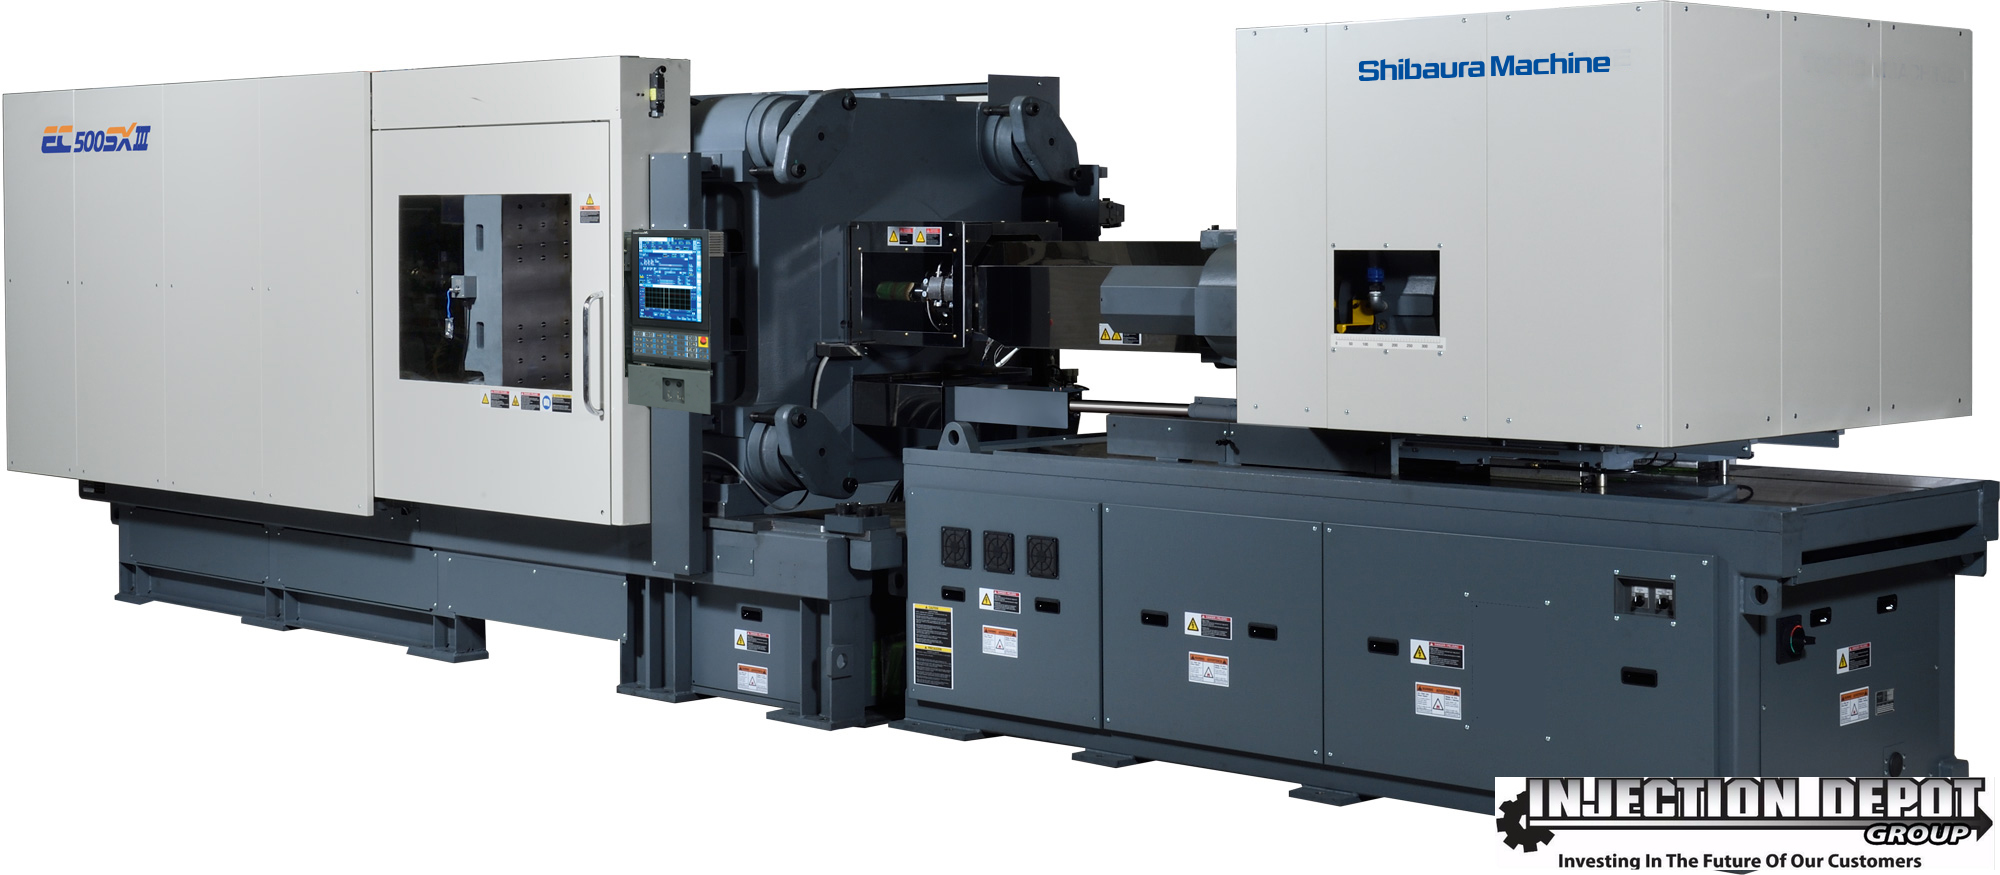 SHIBAURA MACHINE EC500SXIIIV70-i36 Y Horizontal Injection Moulding Machines | INJECTION DEPOT GROUP